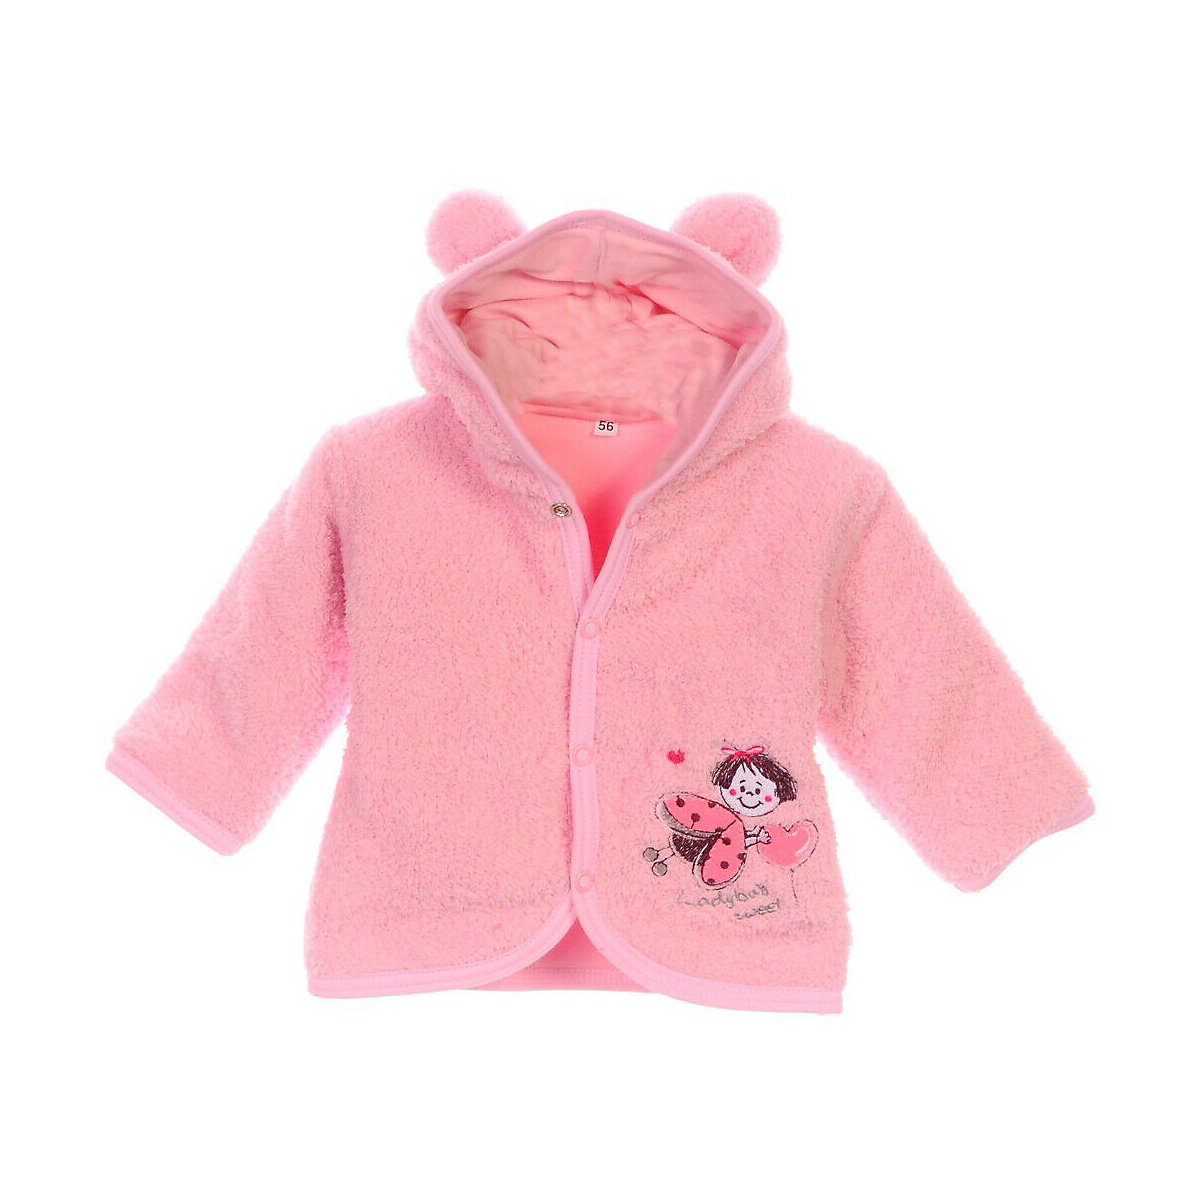 La Bortini Baby Jacke Fleecejacke mit Kapuze Sweatjacken für Mädchen rosa